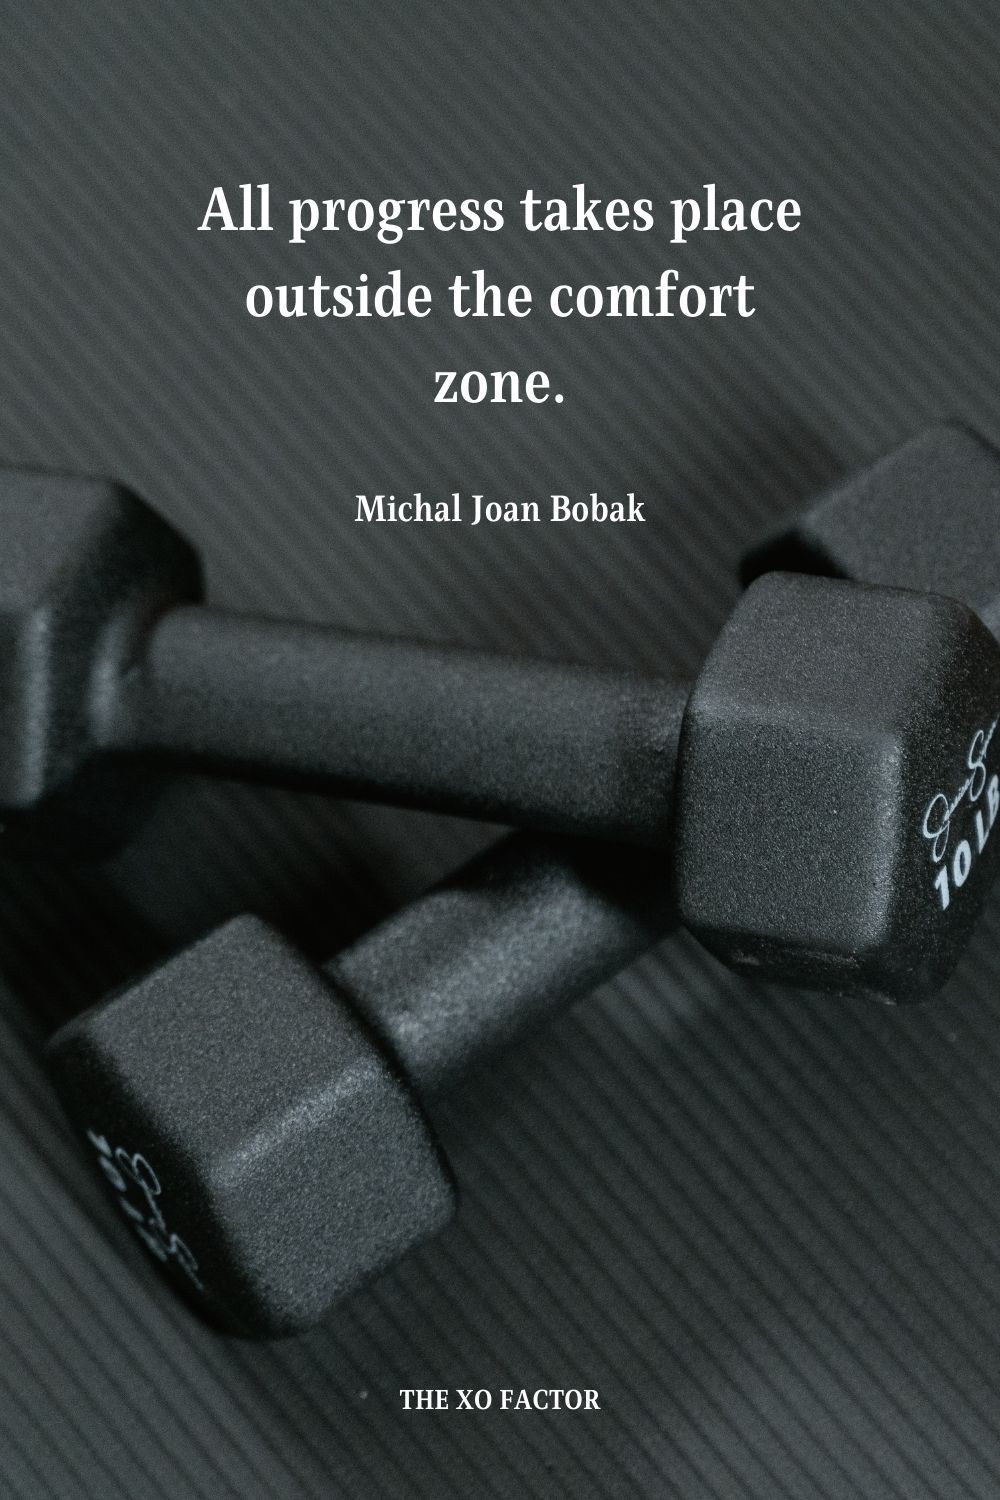 All progress takes place outside the comfort zone. Michal Joan Bobak